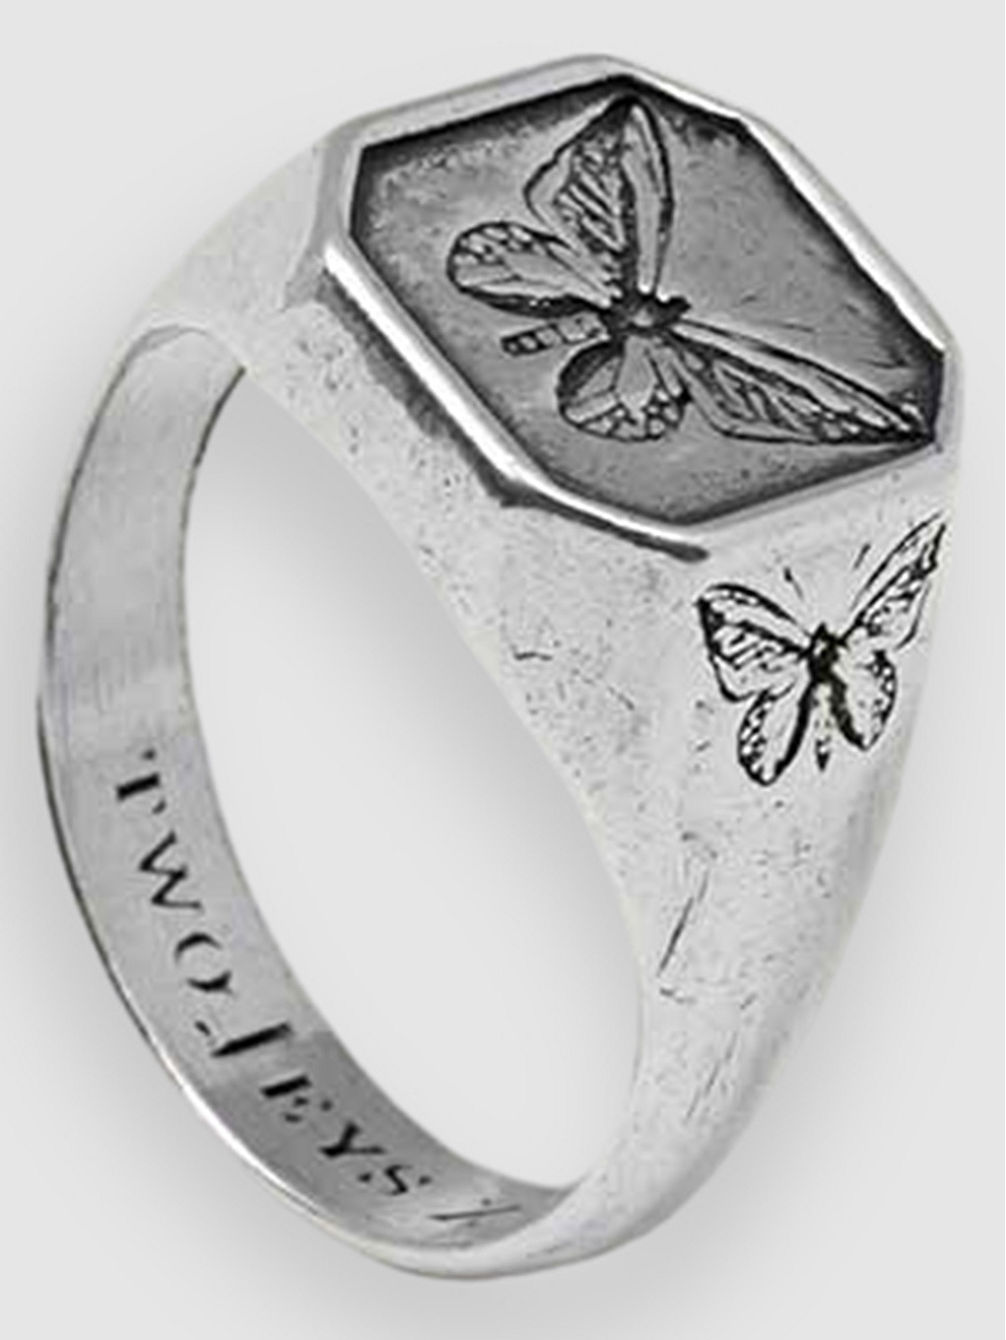 Butterfly Effect Ring 20 Bijoux